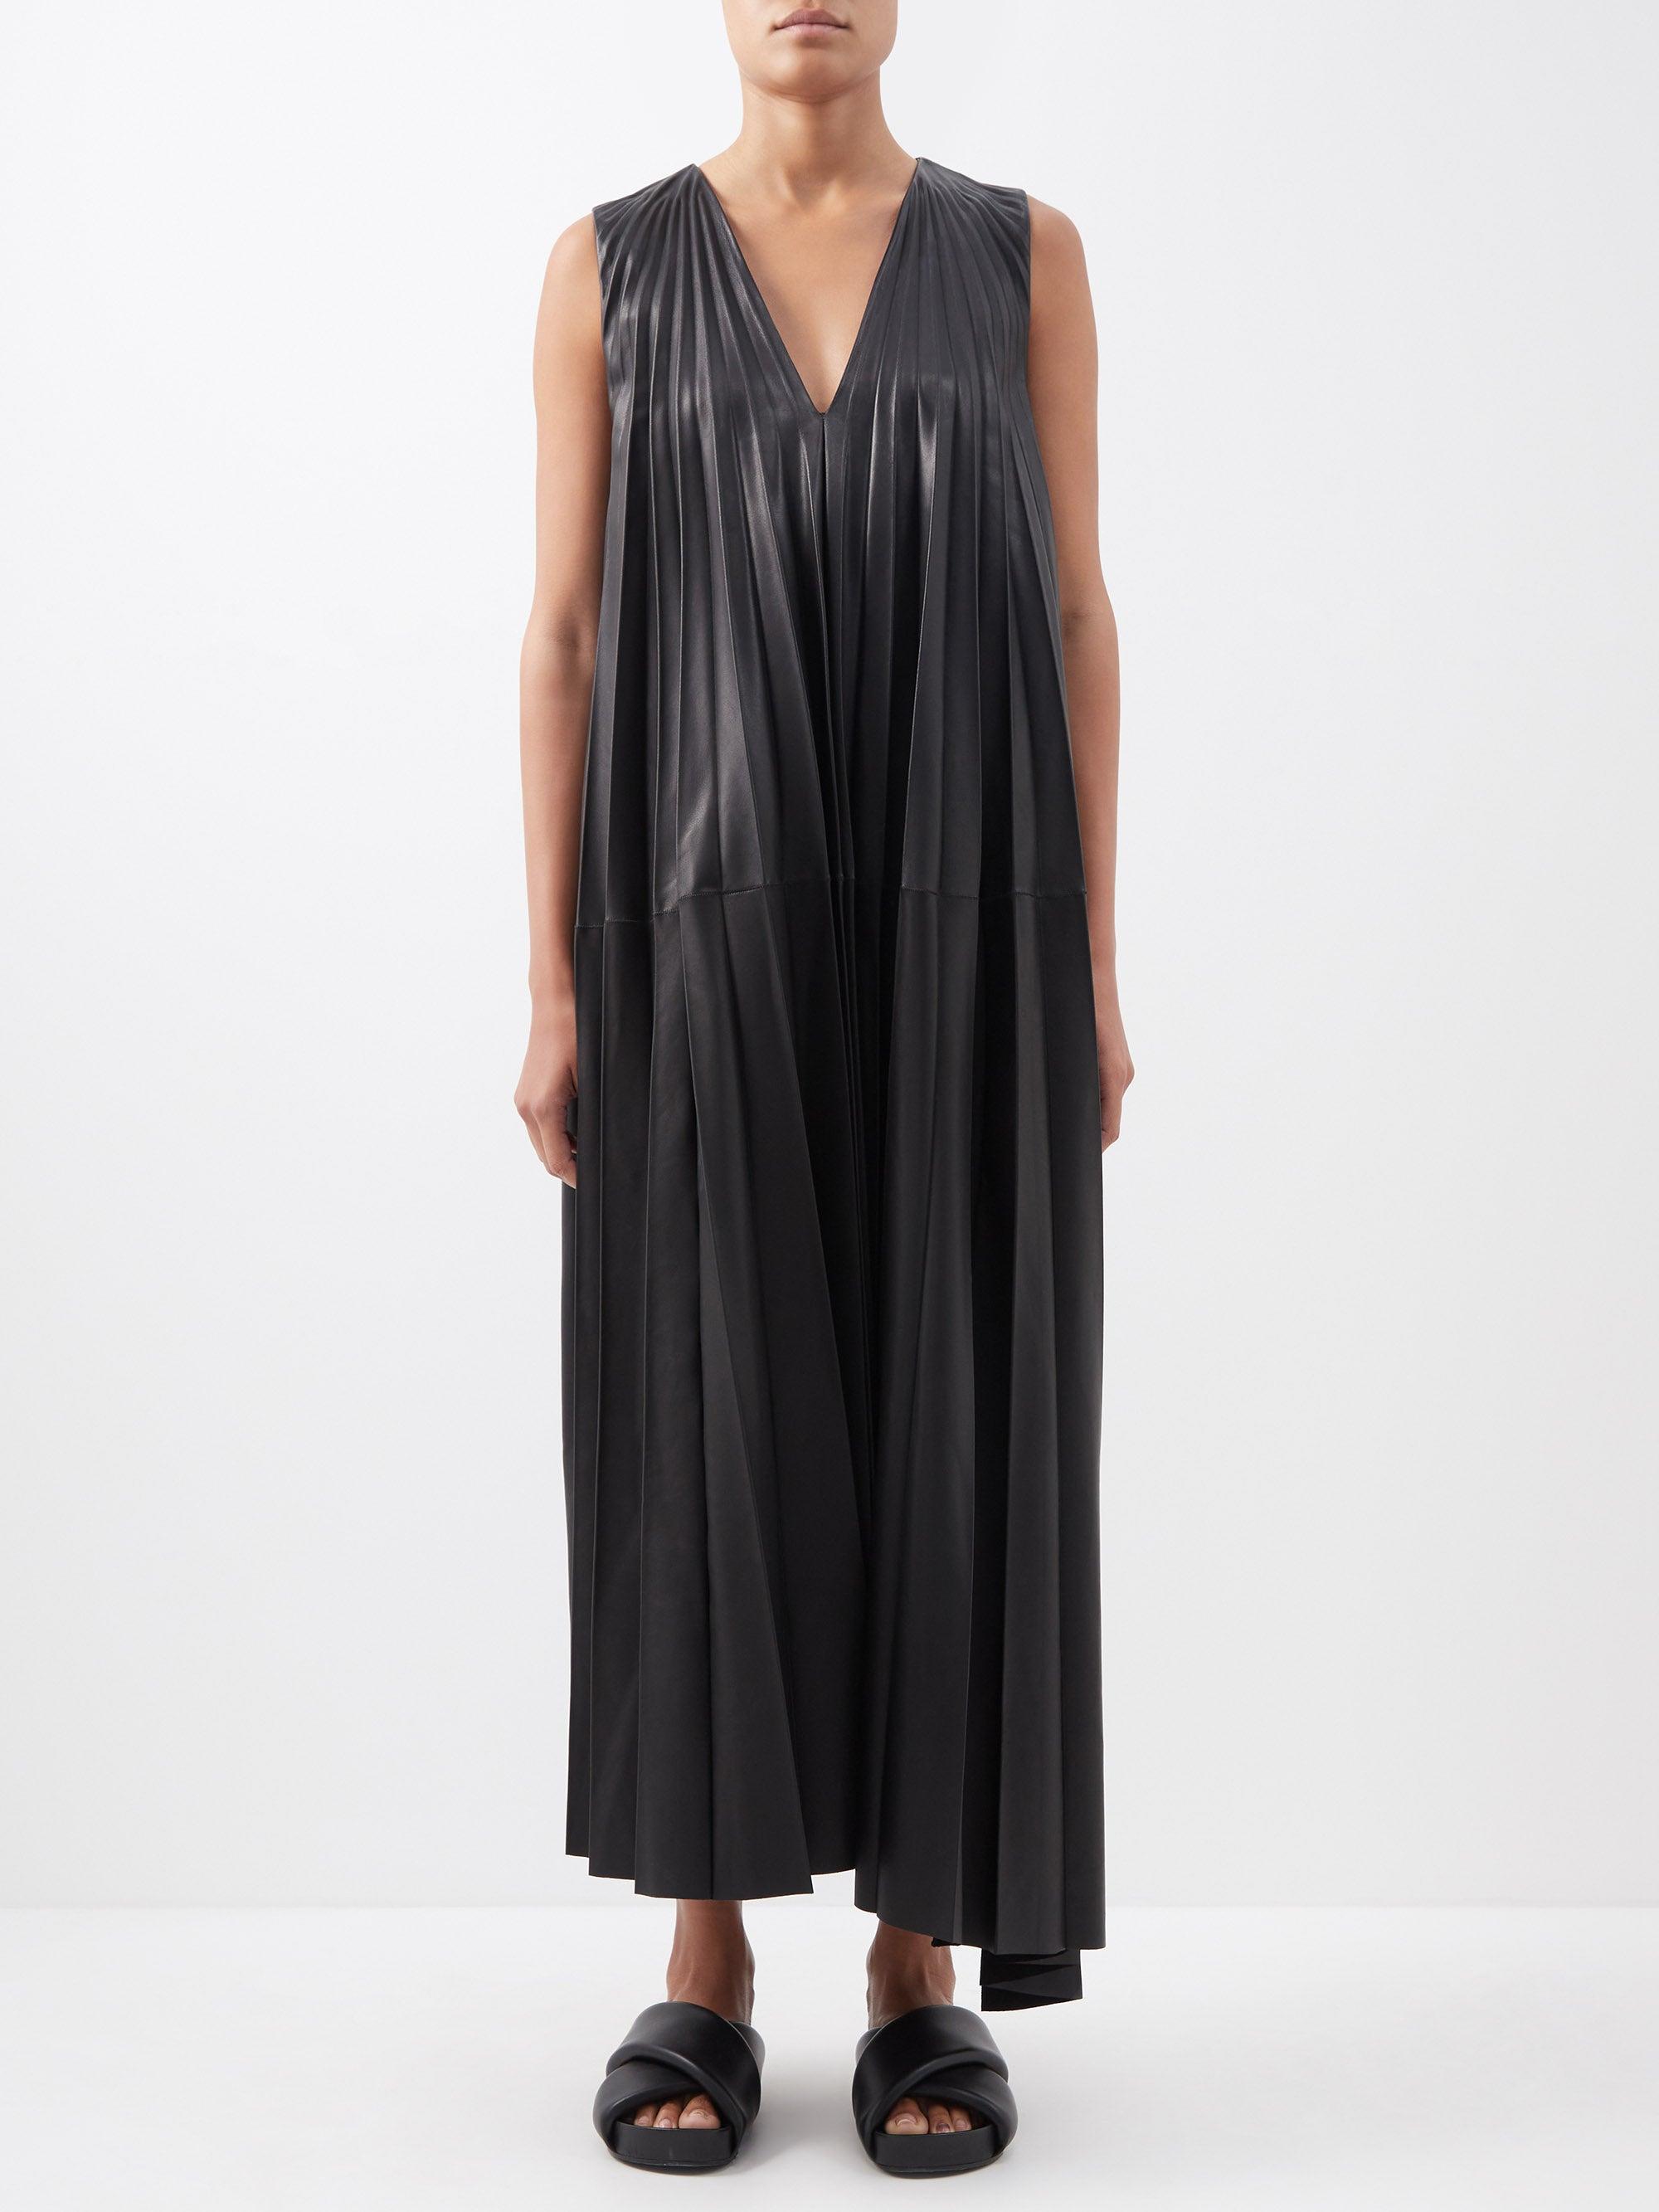 JOSEPH Garratt Asymmetric Pleated Leather Dress in Black | Lyst